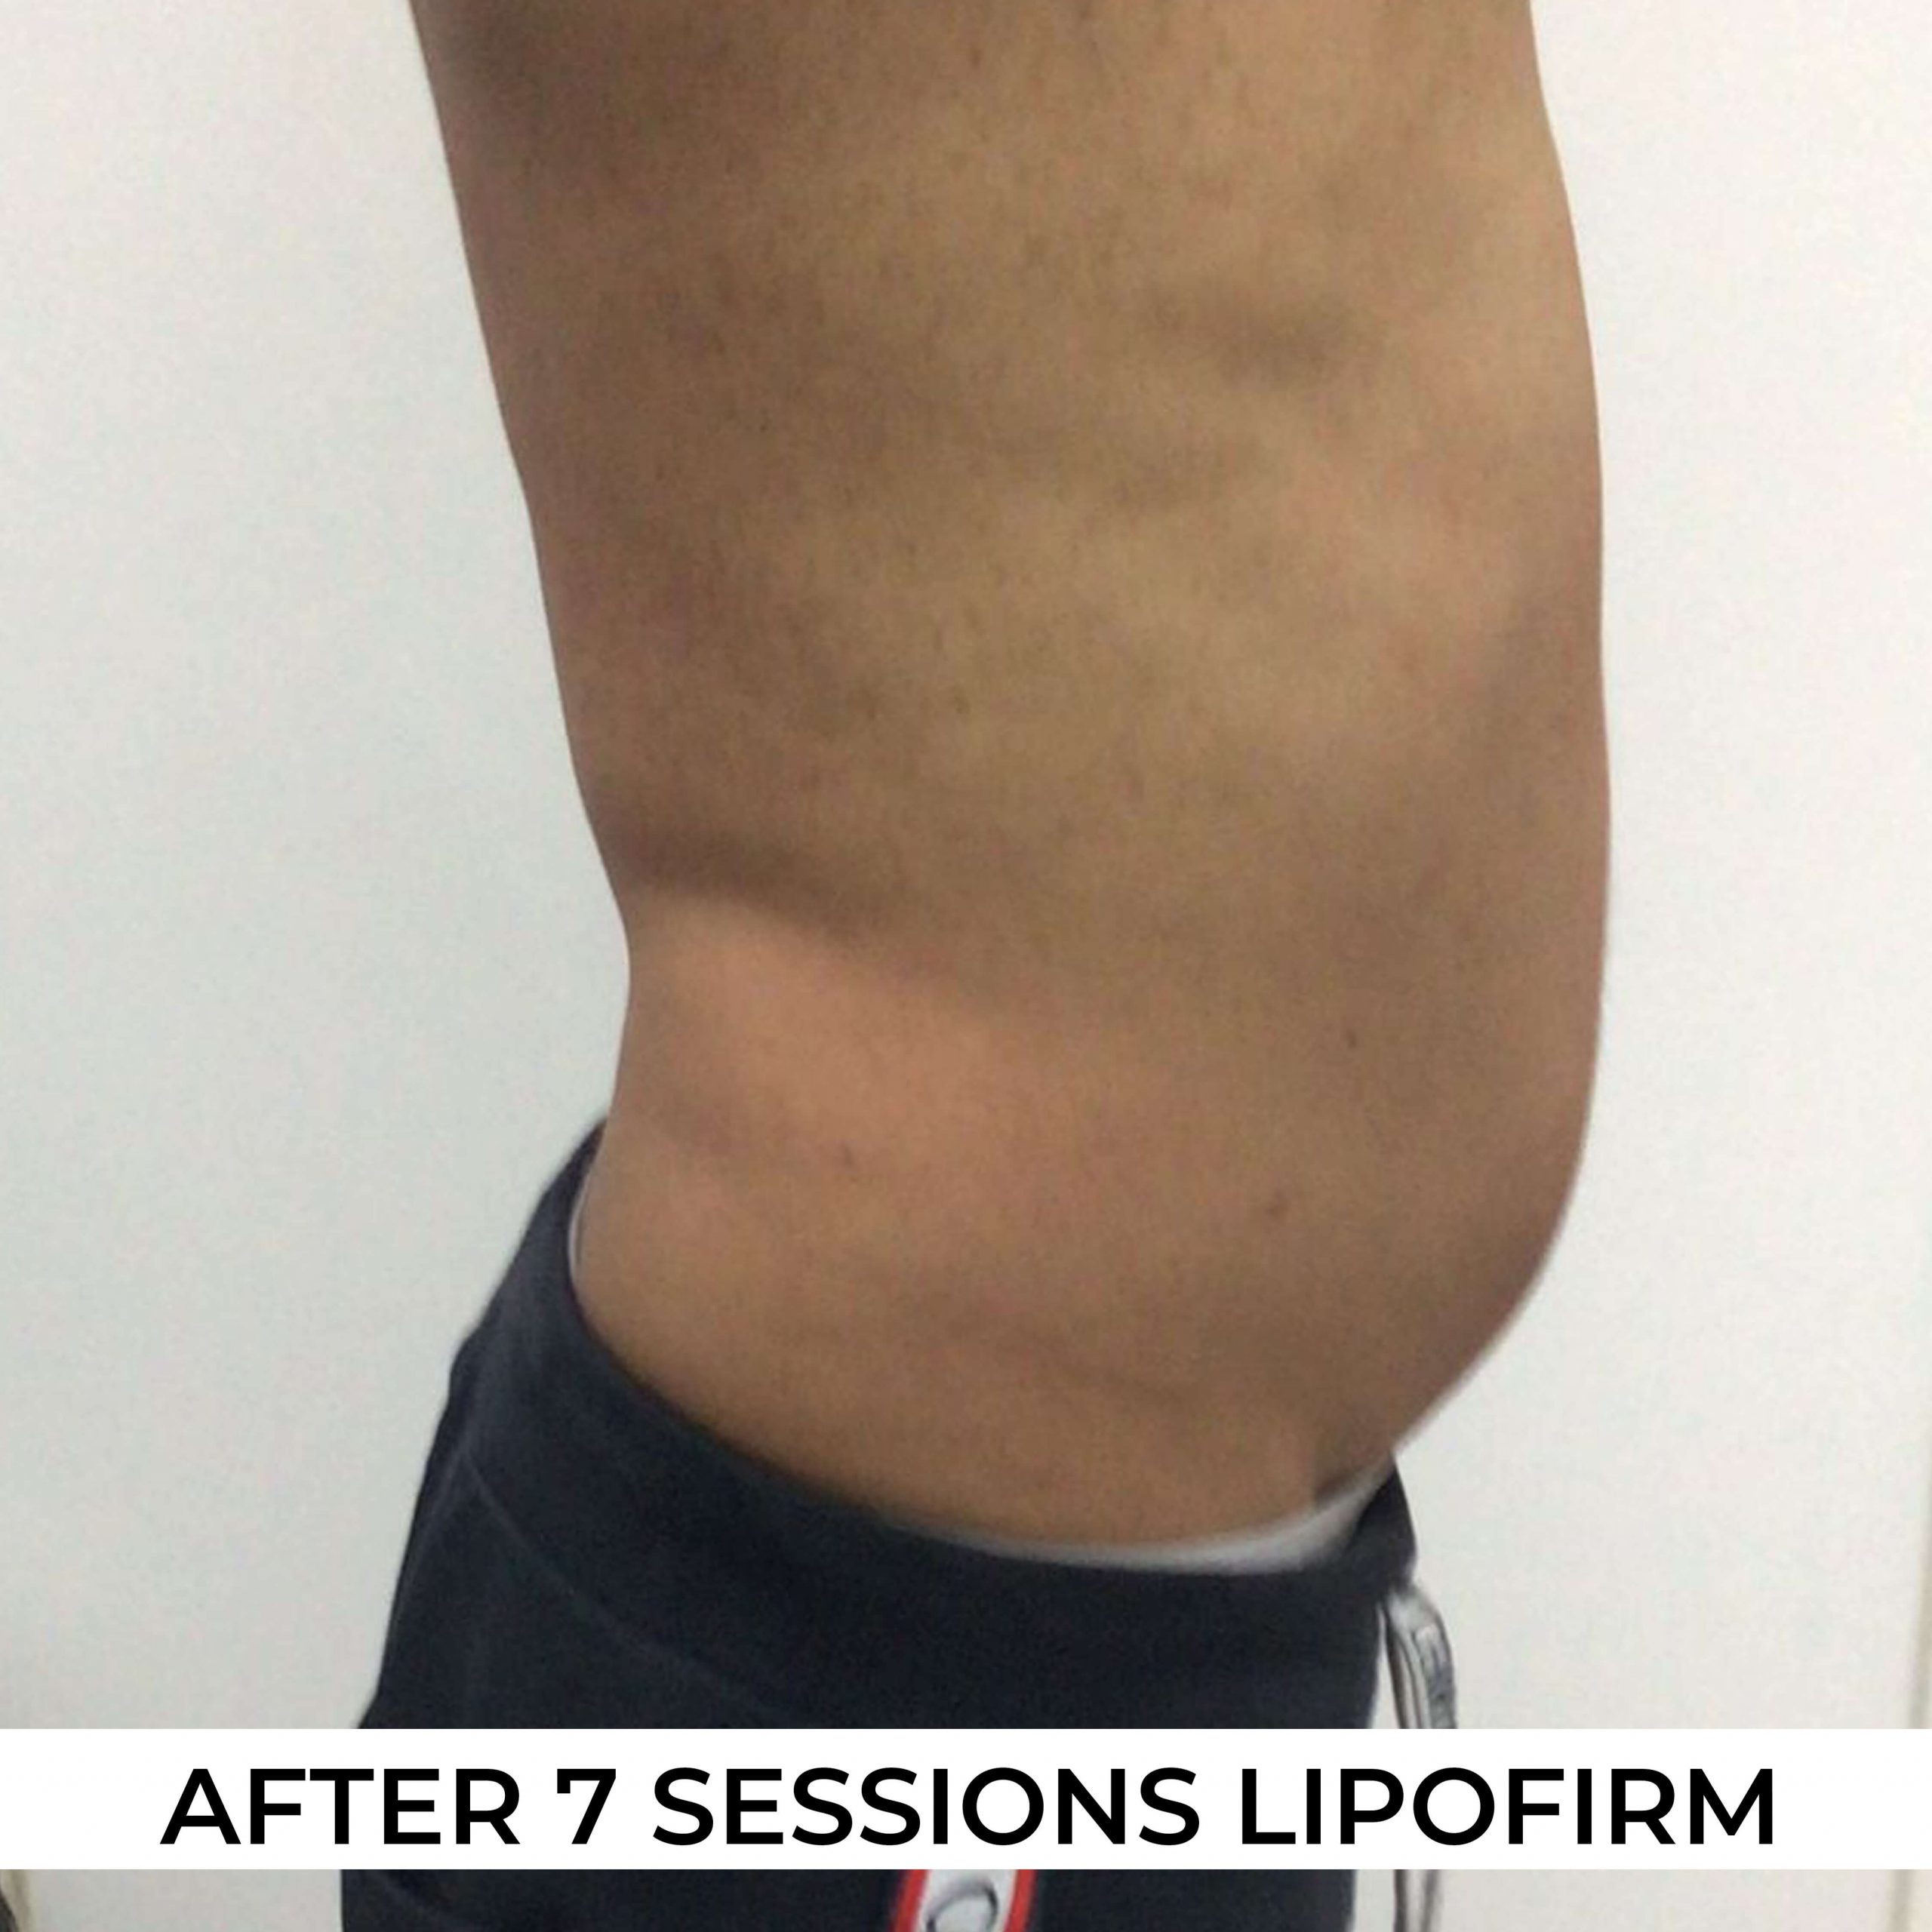 after image of Lipofirm procedure